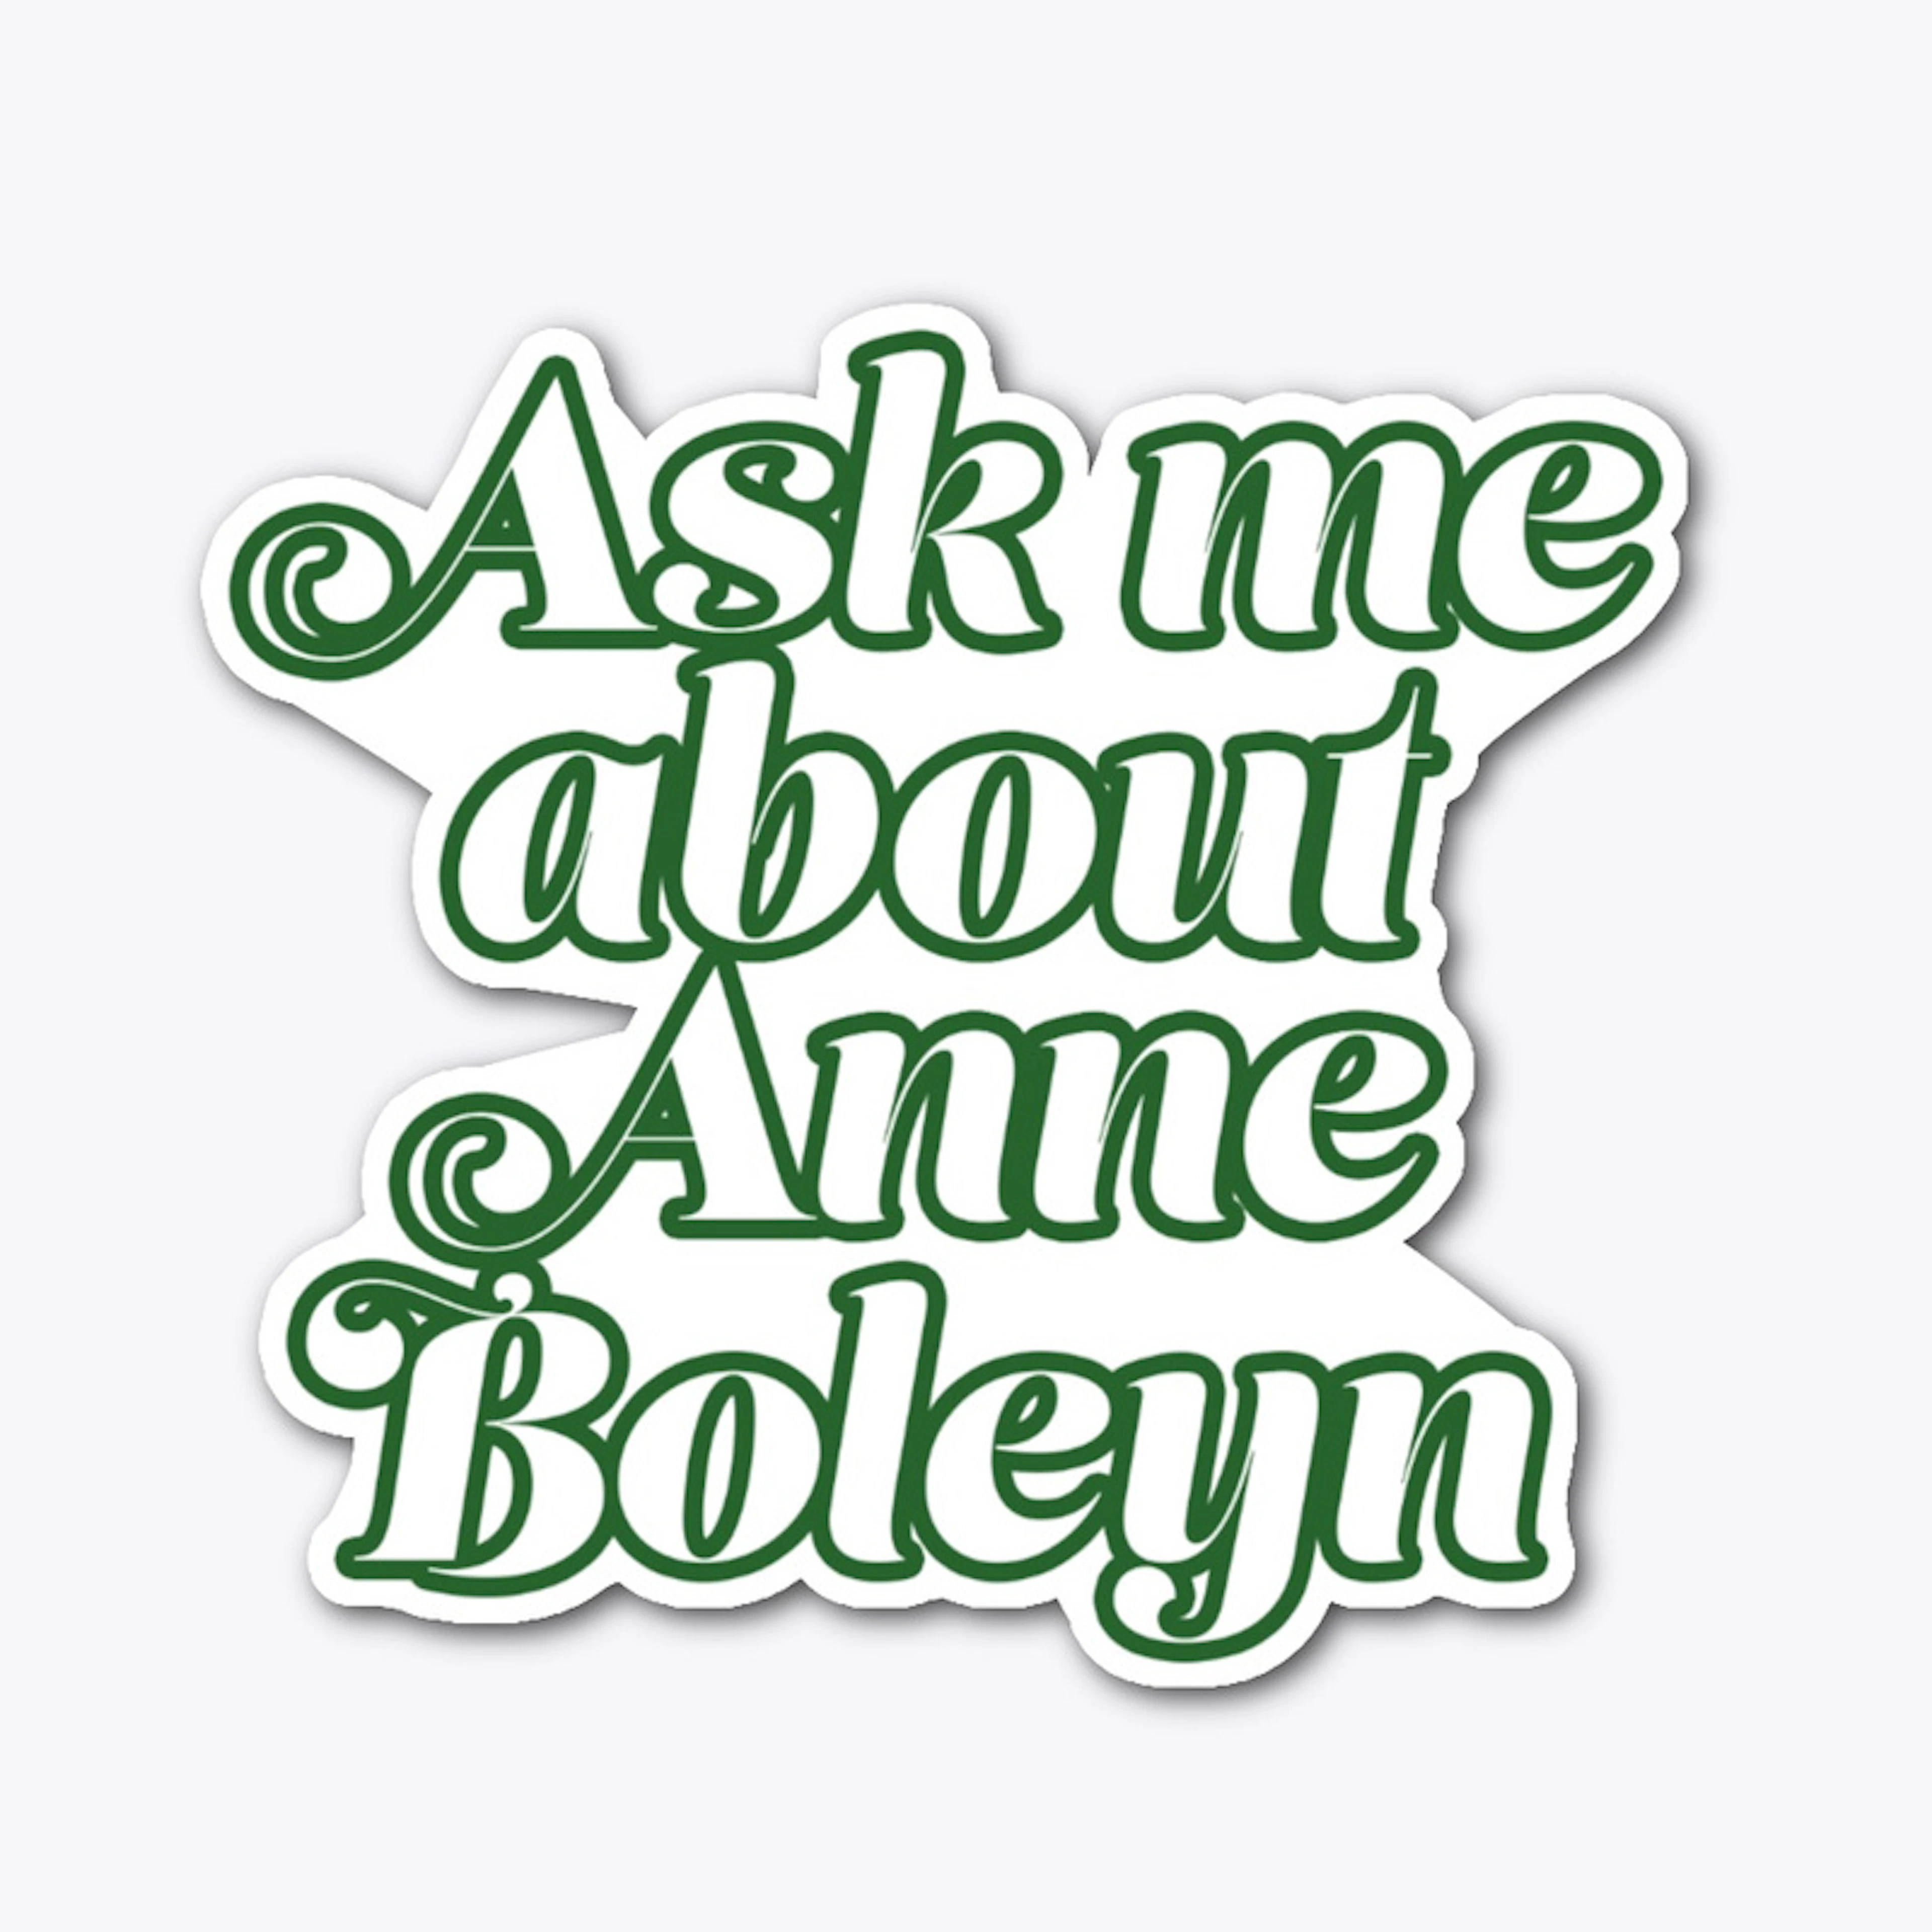 Ask me about Anne Boleyn